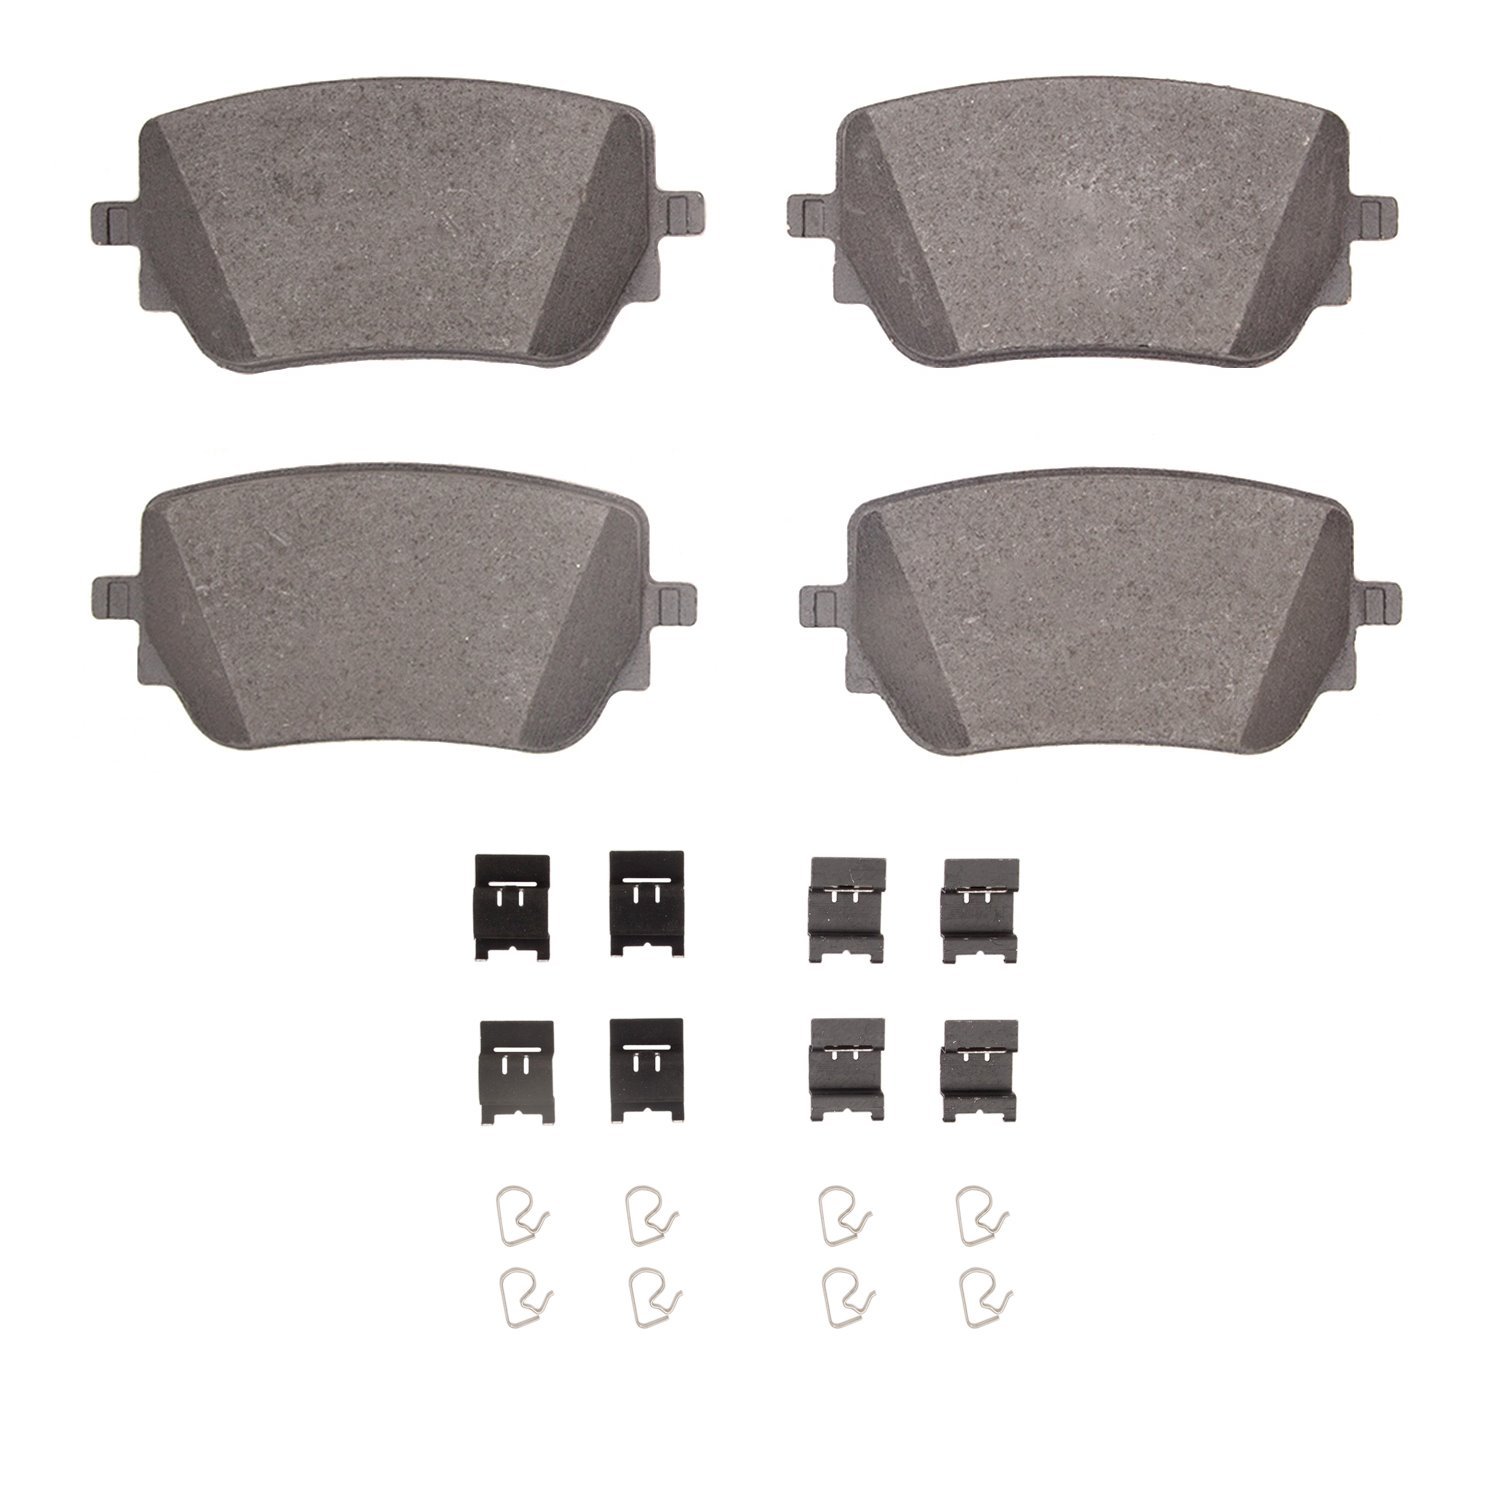 1600-2271-01 5000 Euro Ceramic Brake Pads & Hardware Kit, Fits Select Mercedes-Benz, Position: Rear